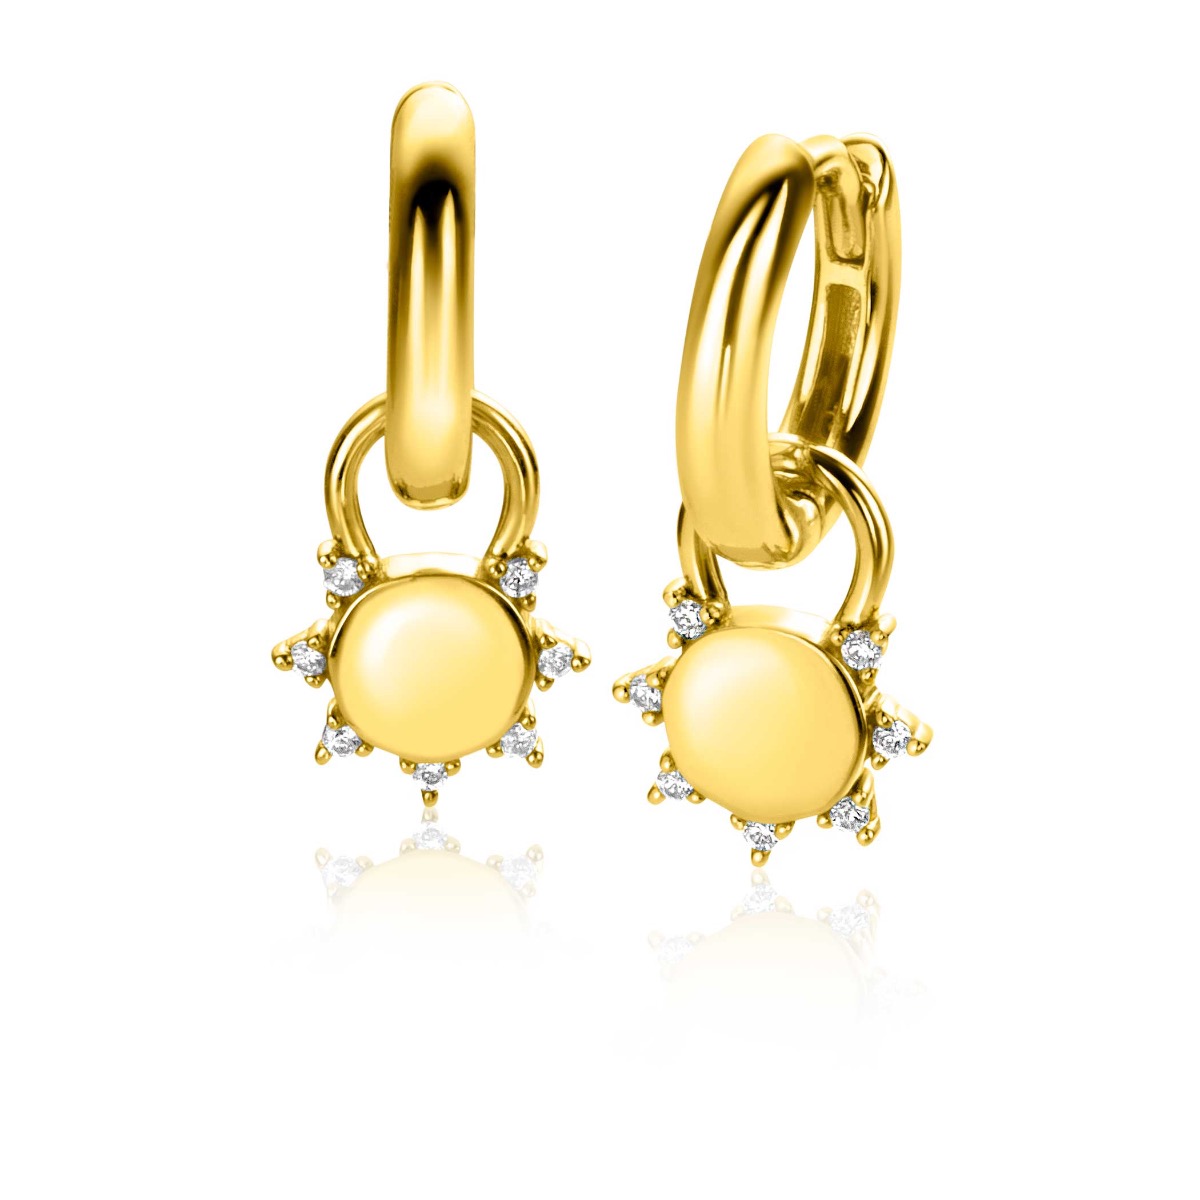 8mm ZINZI Gold Plated Sterling Silver Earrings Pendants Sun with White Zirconias ZICH2302 (excl. hoop earrings)